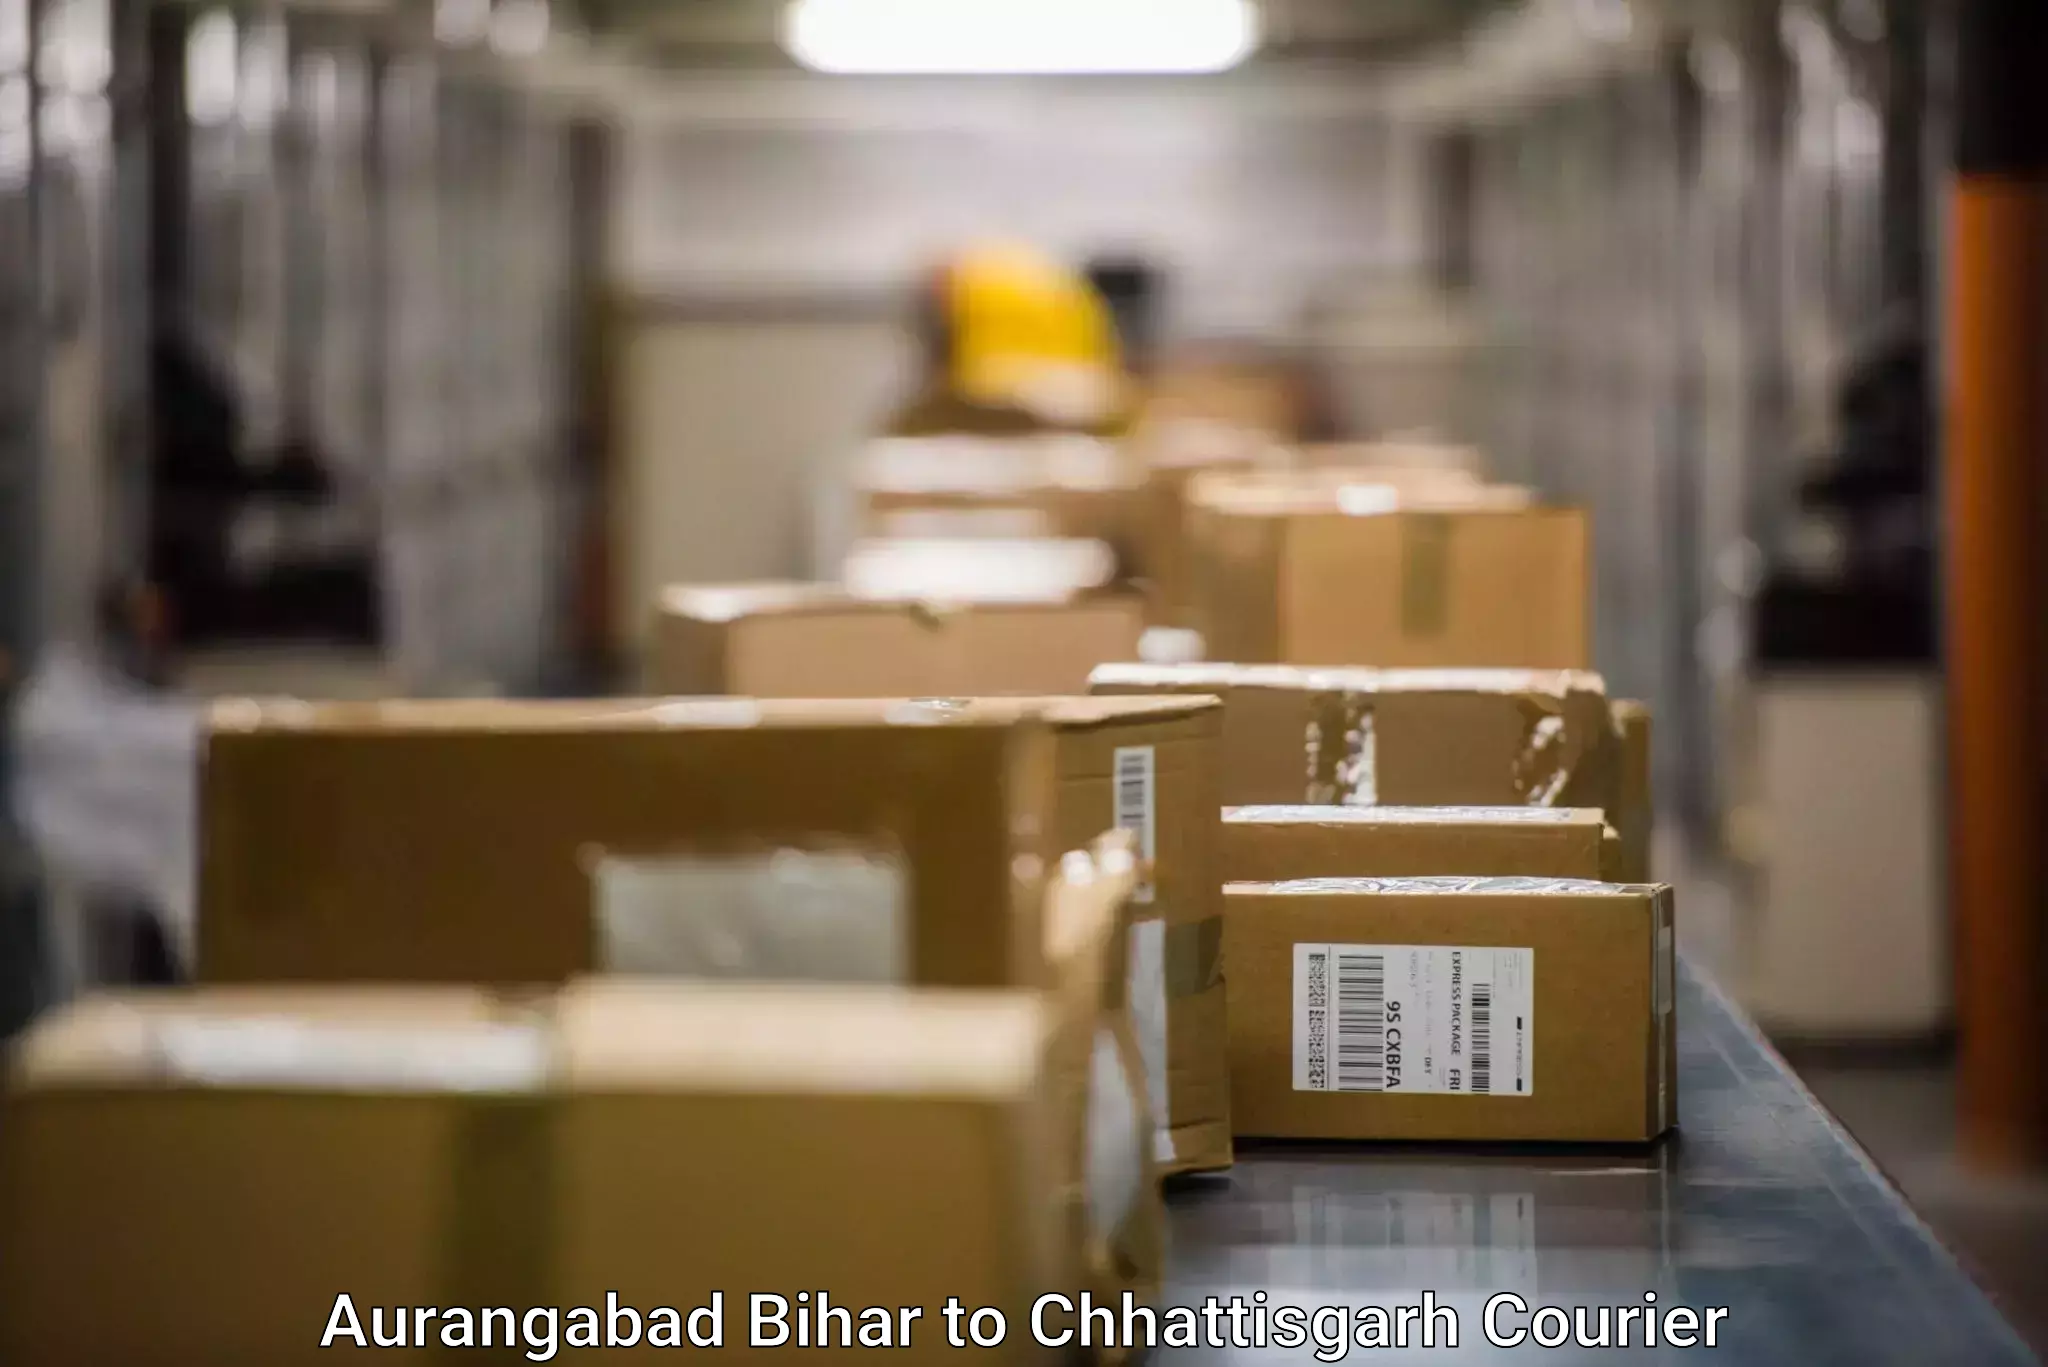 High-efficiency logistics Aurangabad Bihar to Chhattisgarh